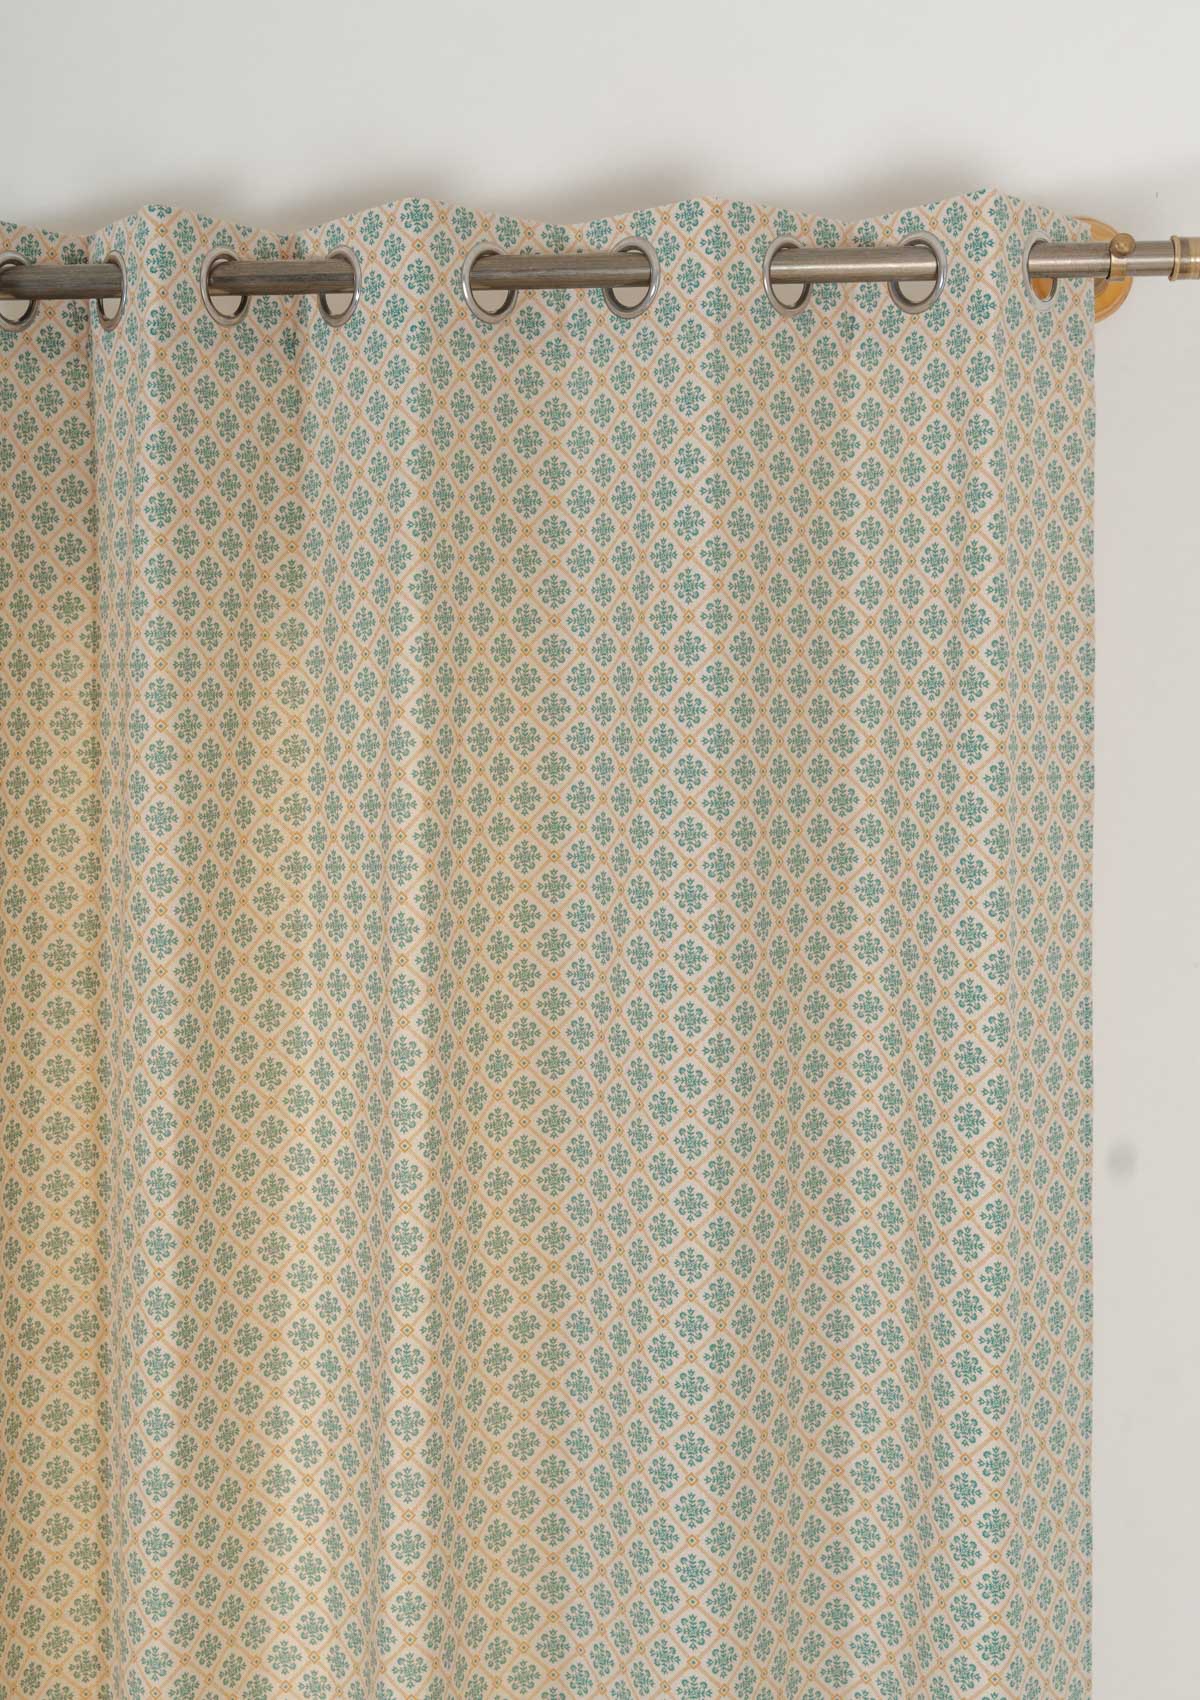 Yura 100% cotton geometric customisable curtain for living room - Room darkening - Aqua blue